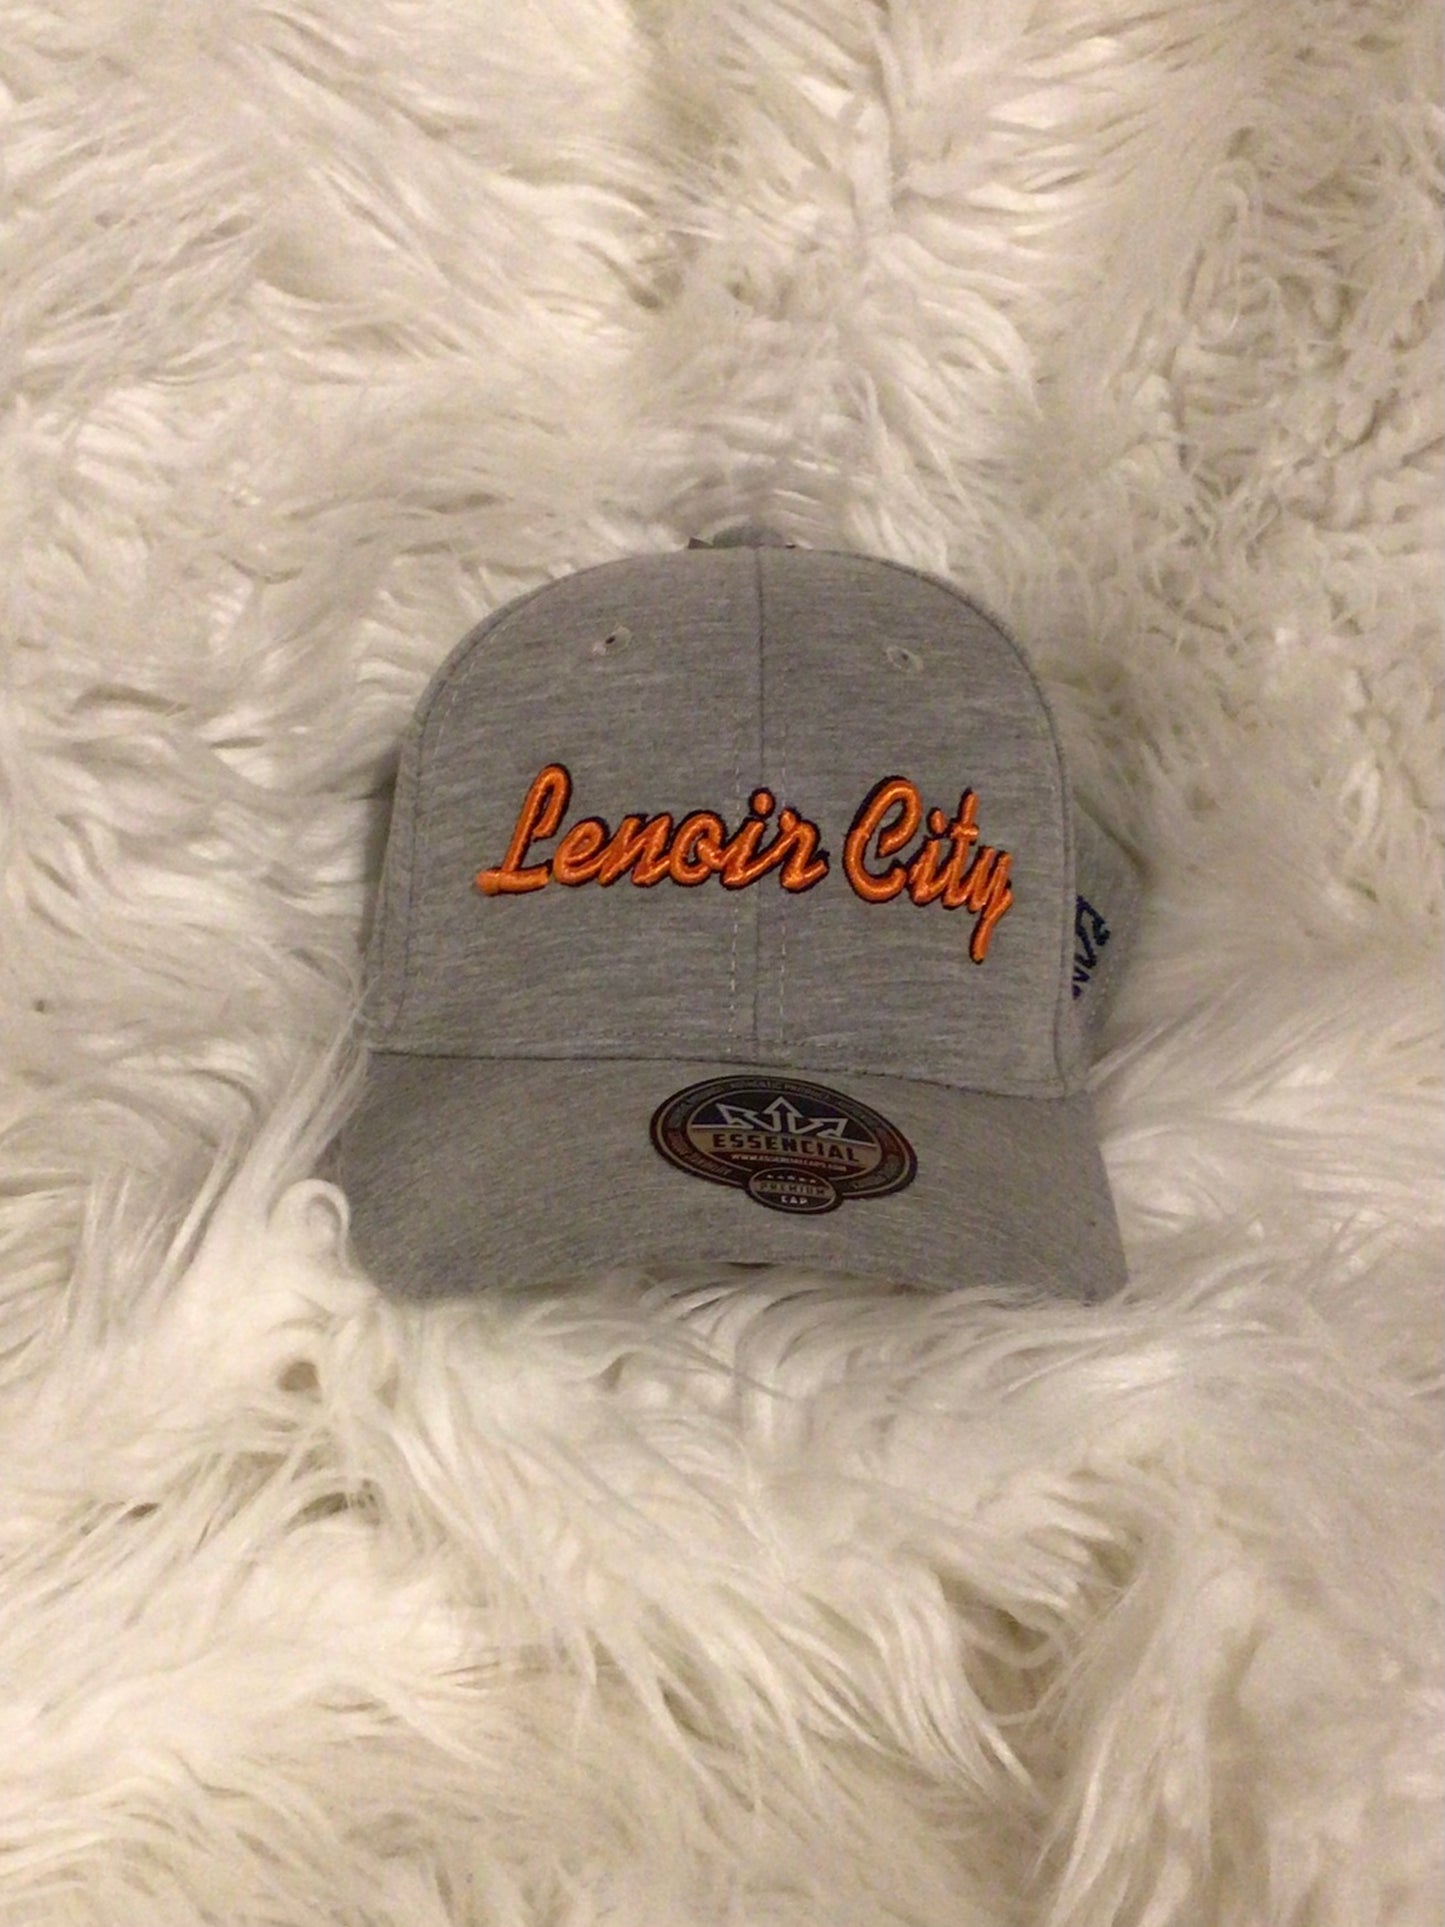 * Lenoir City Fitted Ball Cap